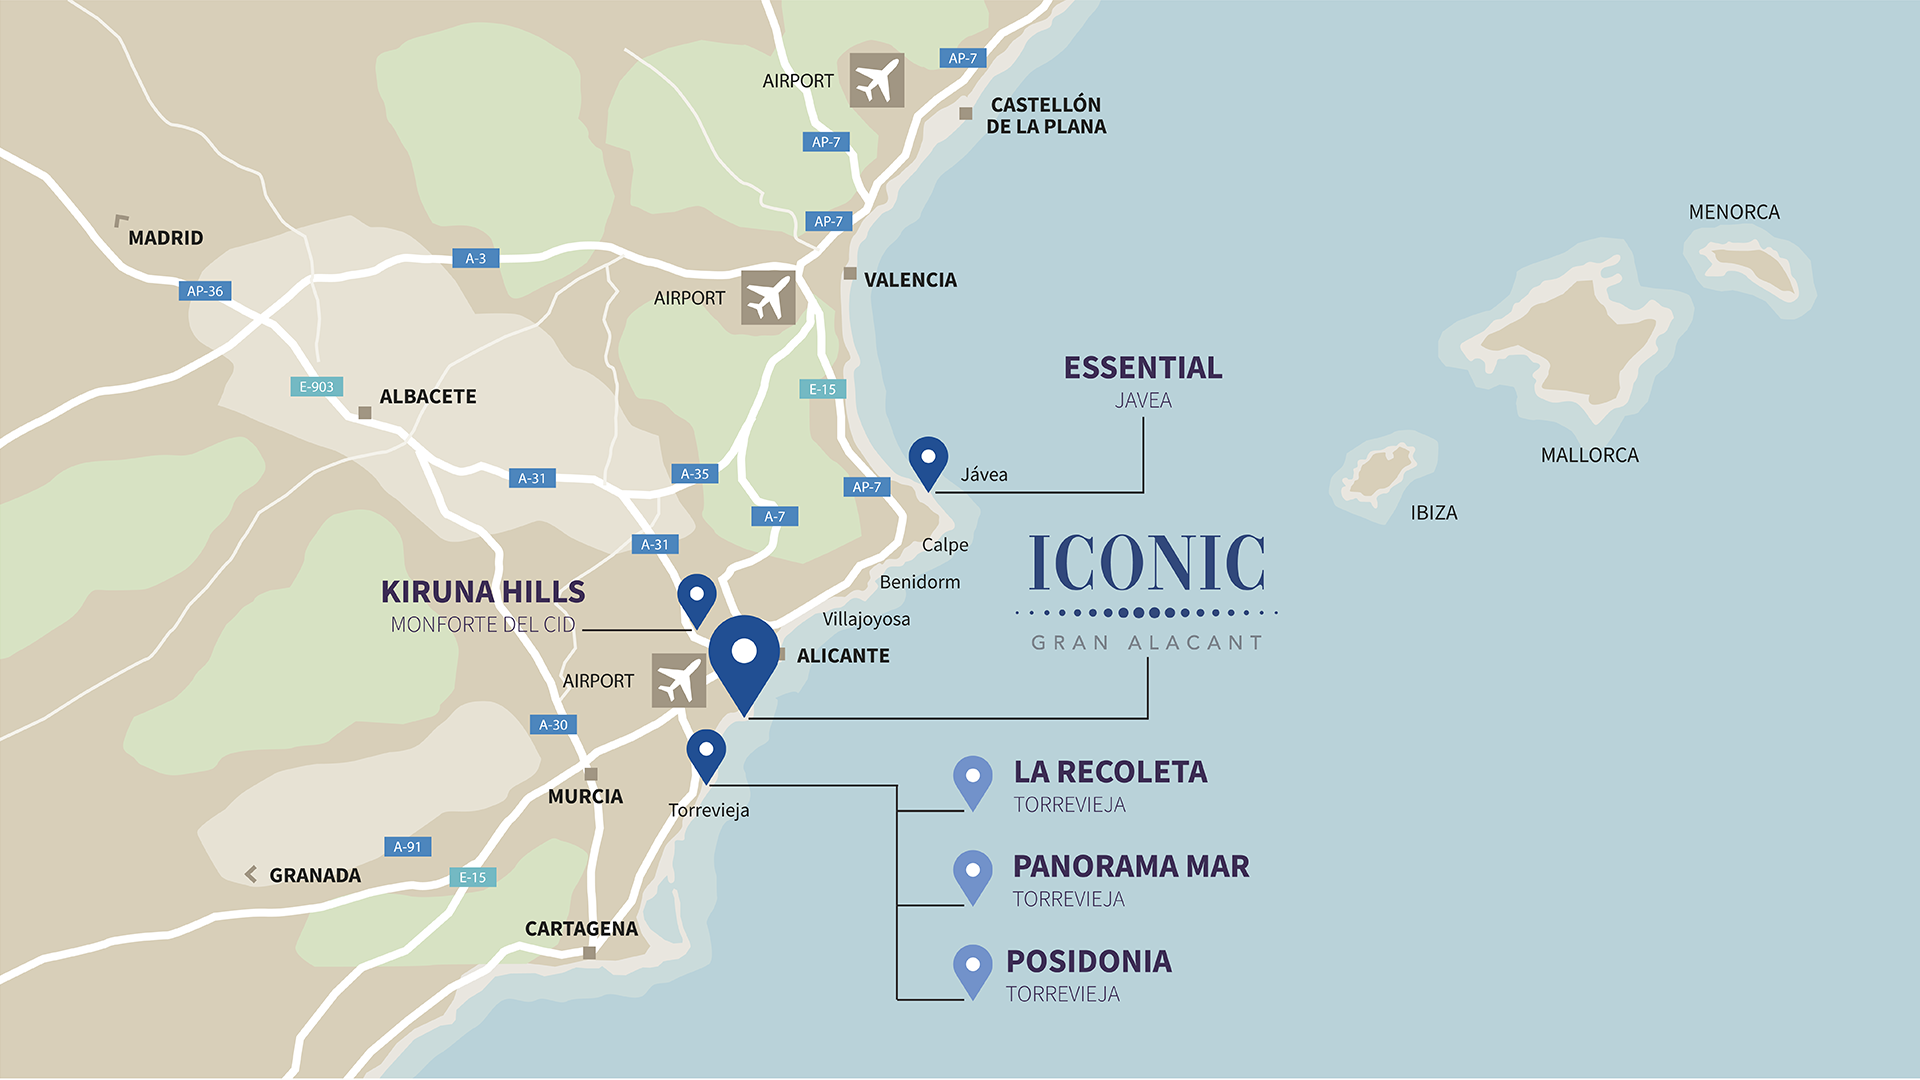 Mapa ICONIC es